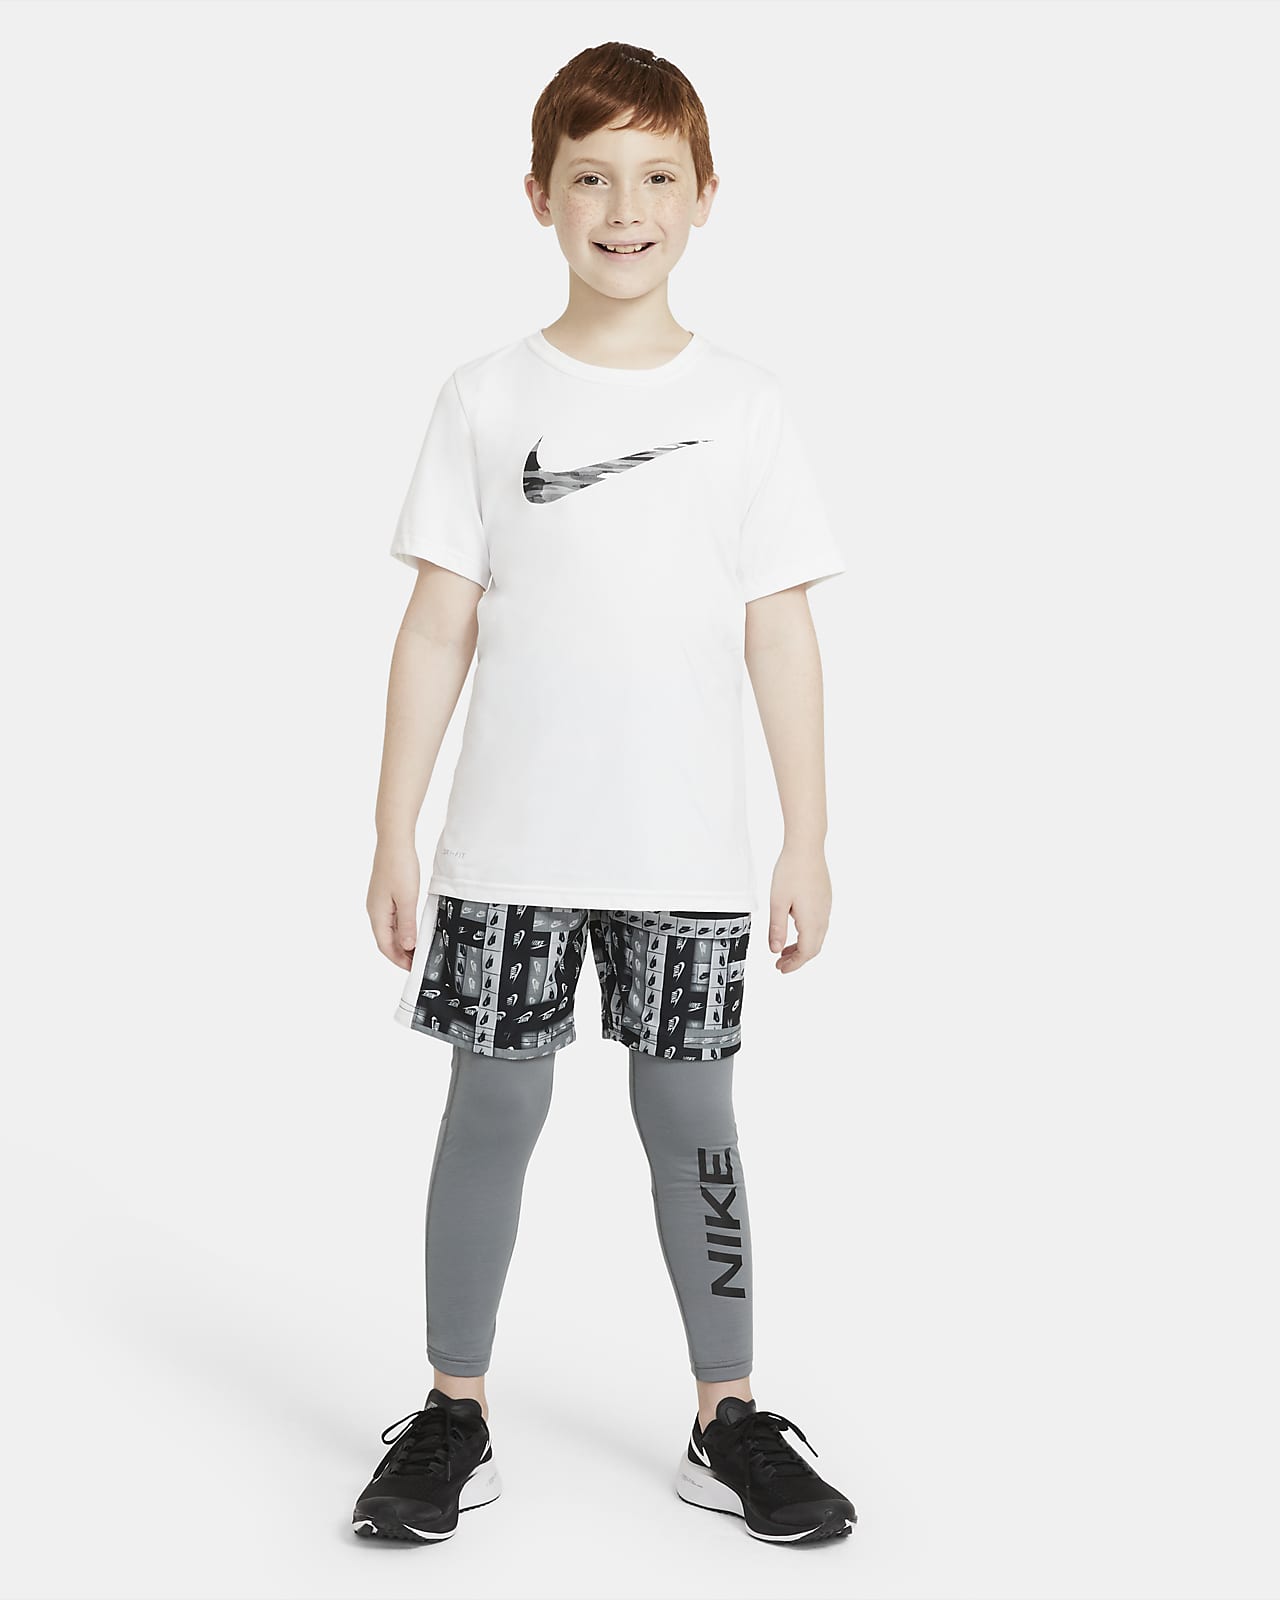 Nike Pro Warm Big Kids' (Boys') Graphic 